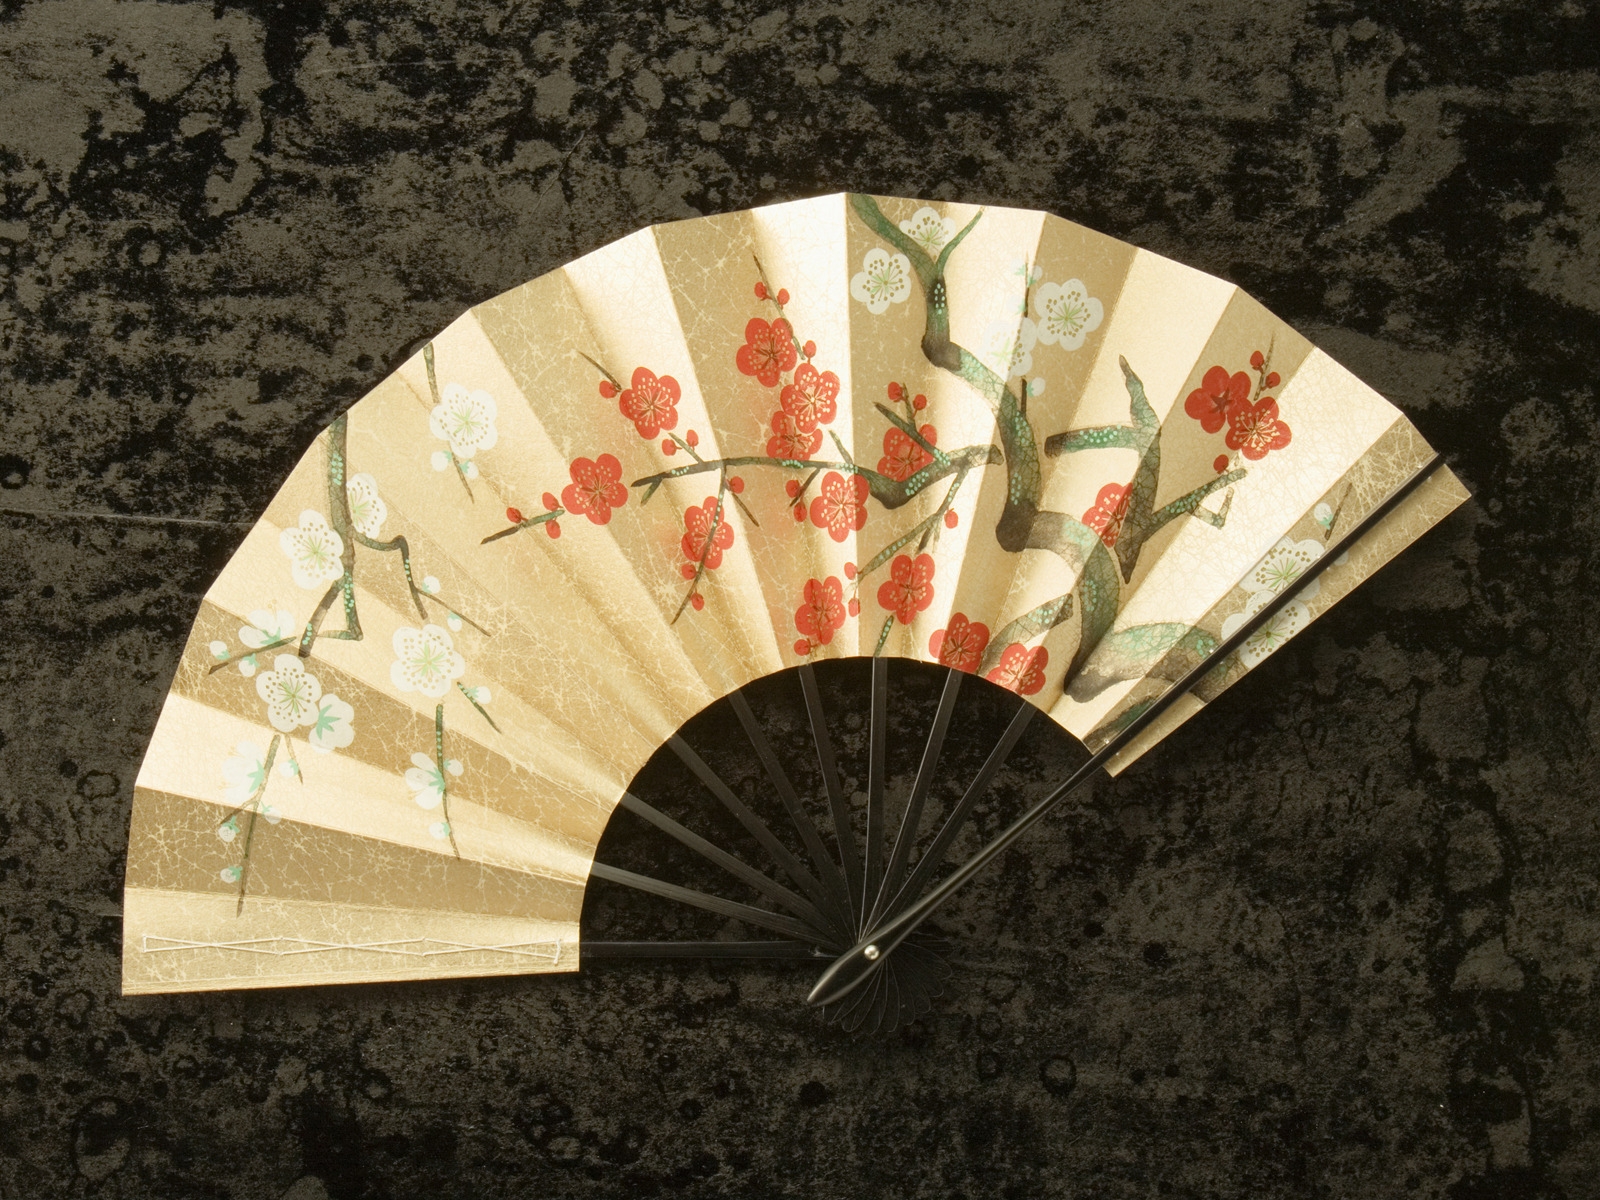 Vintage Fan for 1600 x 1200 resolution